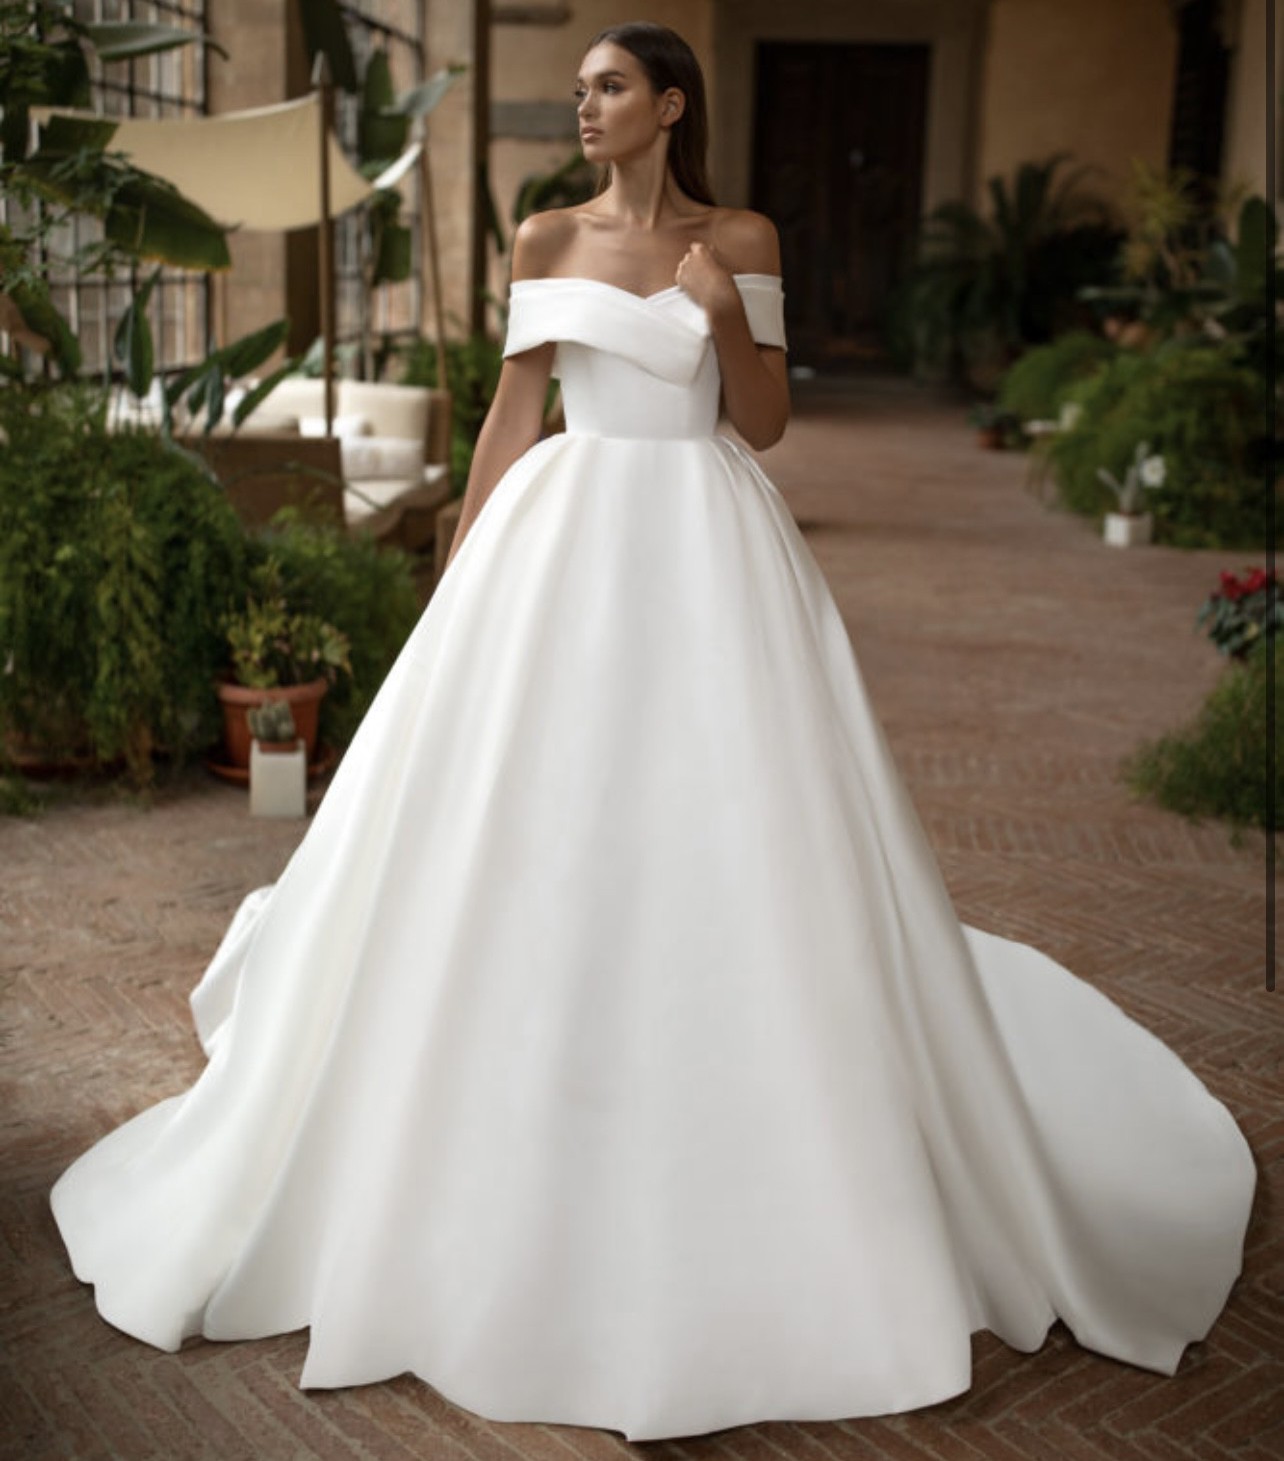 Milla Nova Matilda Royal Collection New Wedding Dress Save 25% - Stillwhite